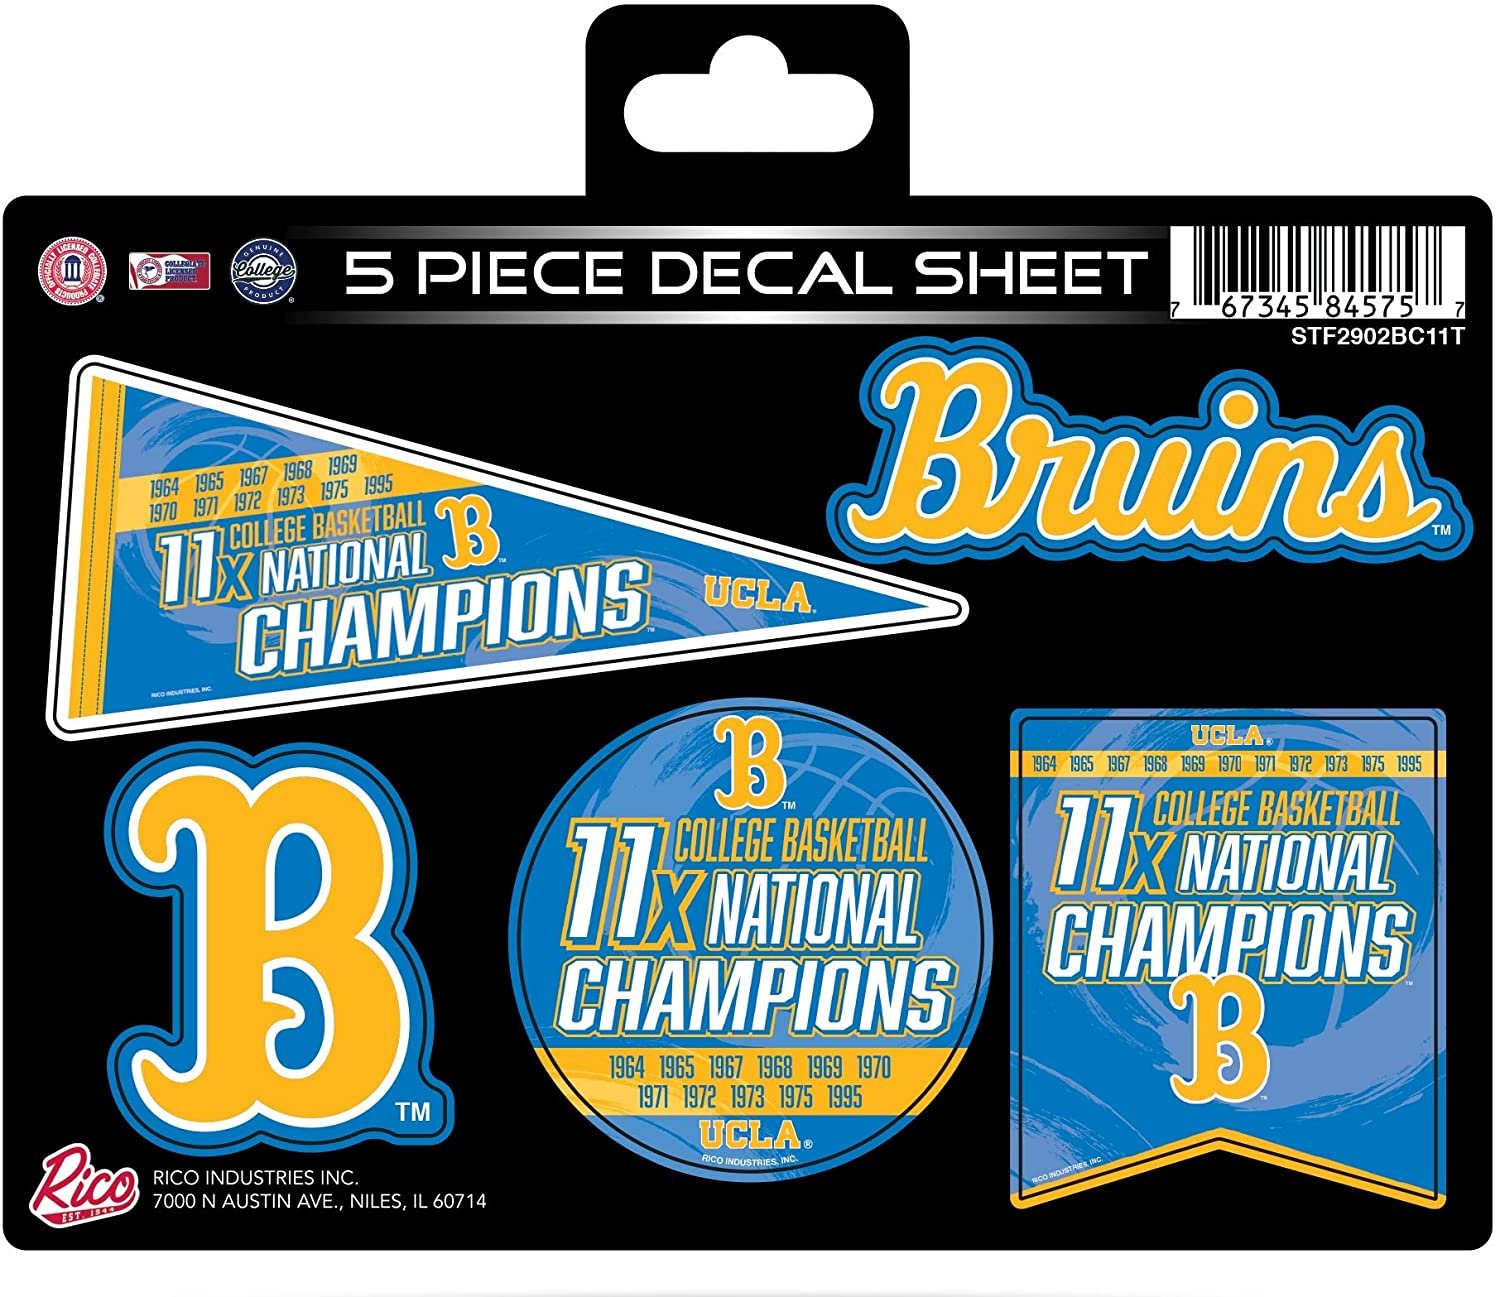 Bruins Decal Sticker 11X Time Champions 5 Piece Multi Sheet Flat Vinyl Emblem College Basketball University of California Los Angeles